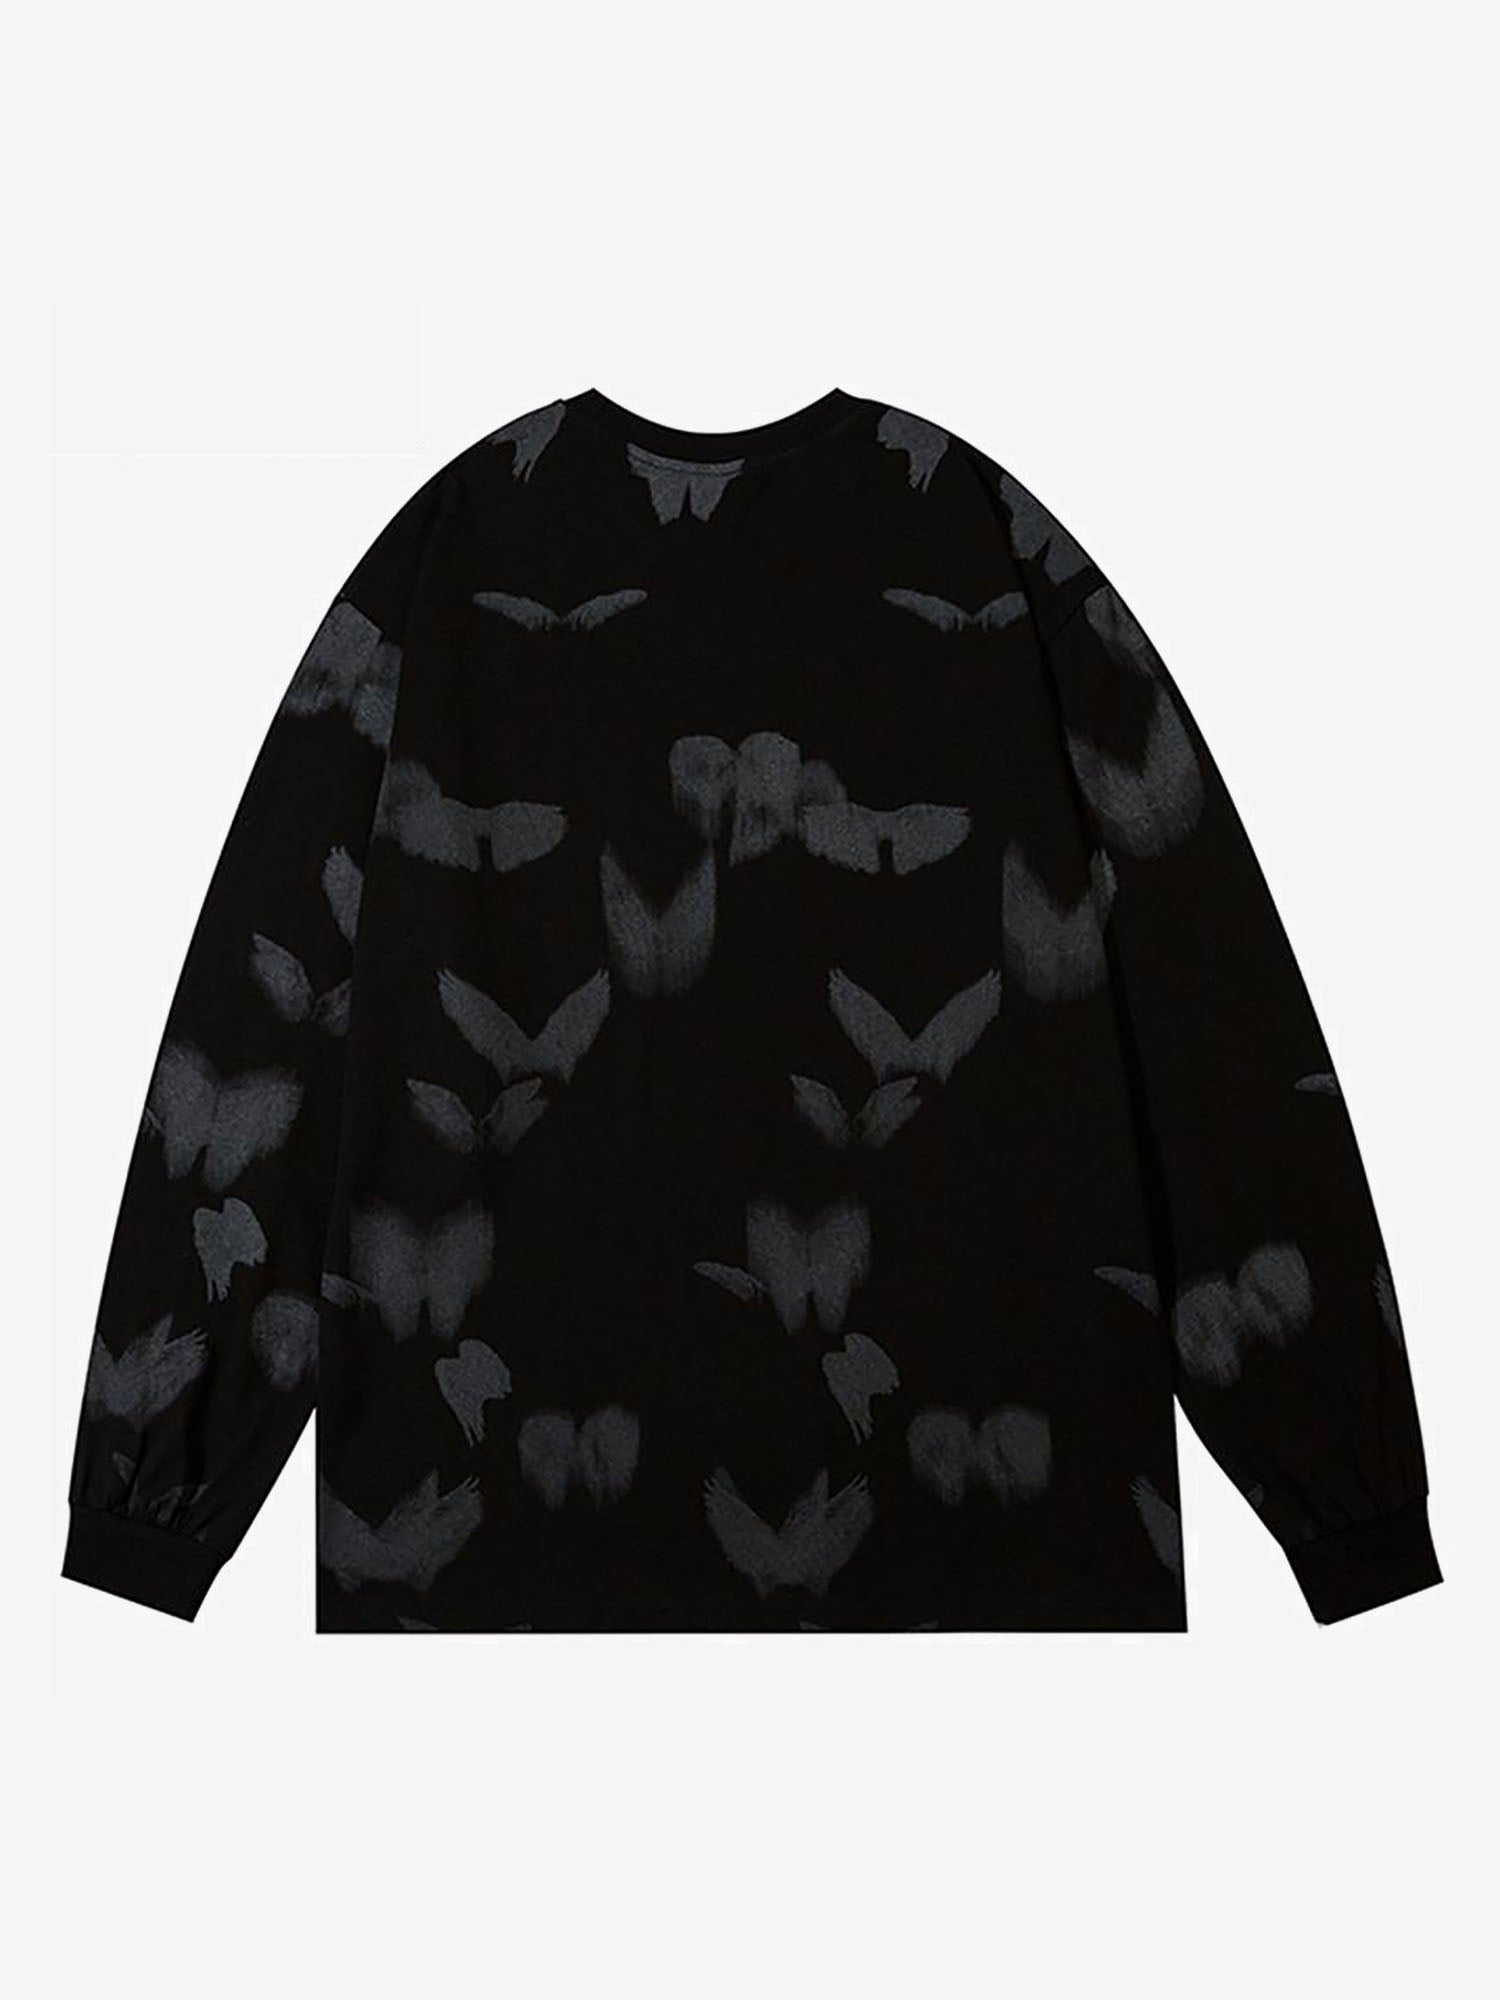 Justnotag Langarm-Sweatshirts mit Schmetterlingsdruck